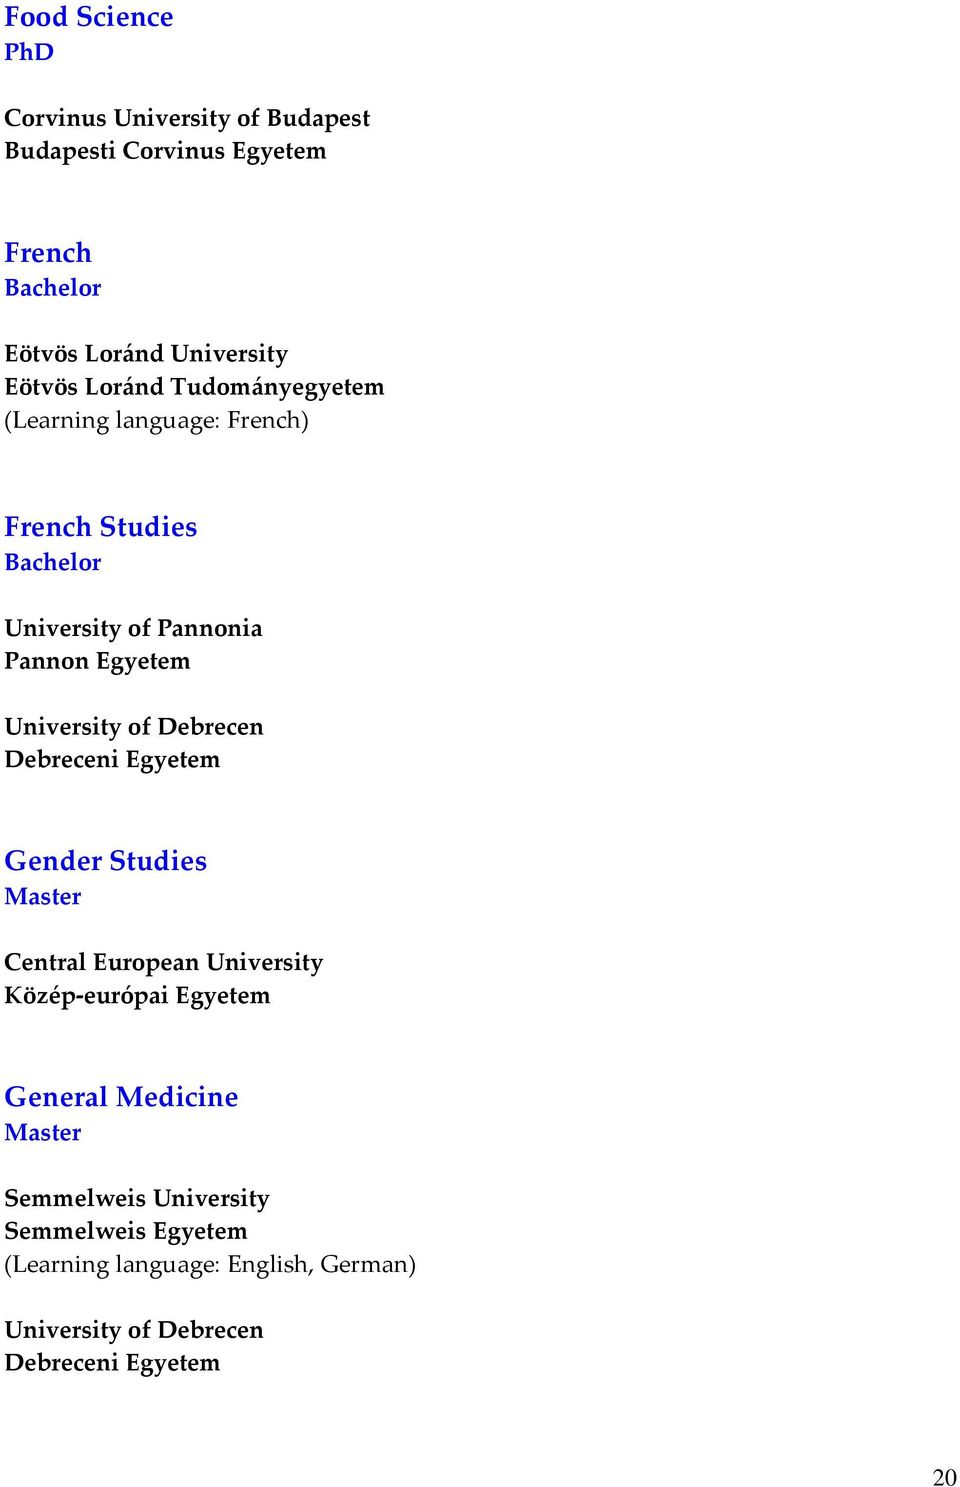 University of Pannonia Pannon Egyetem Gender Studies General